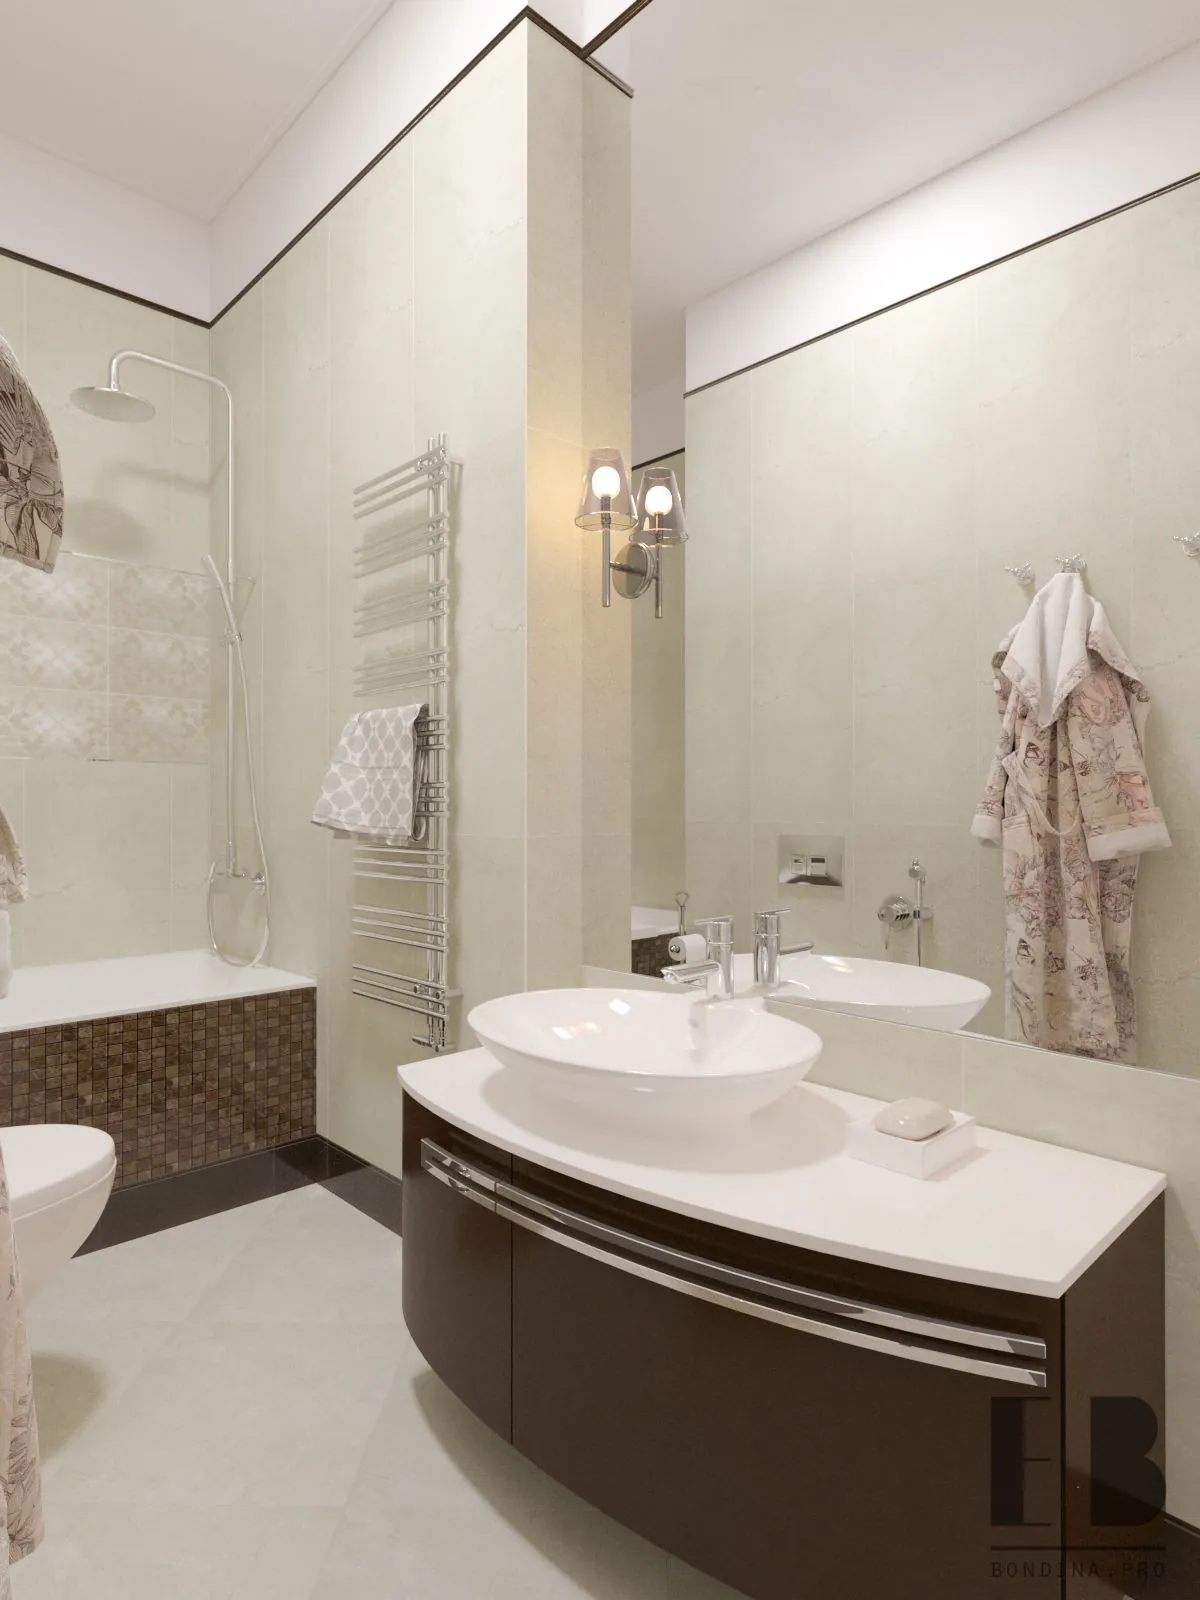 Black wood vanity and white vessel sink - Traditional bathroom interior